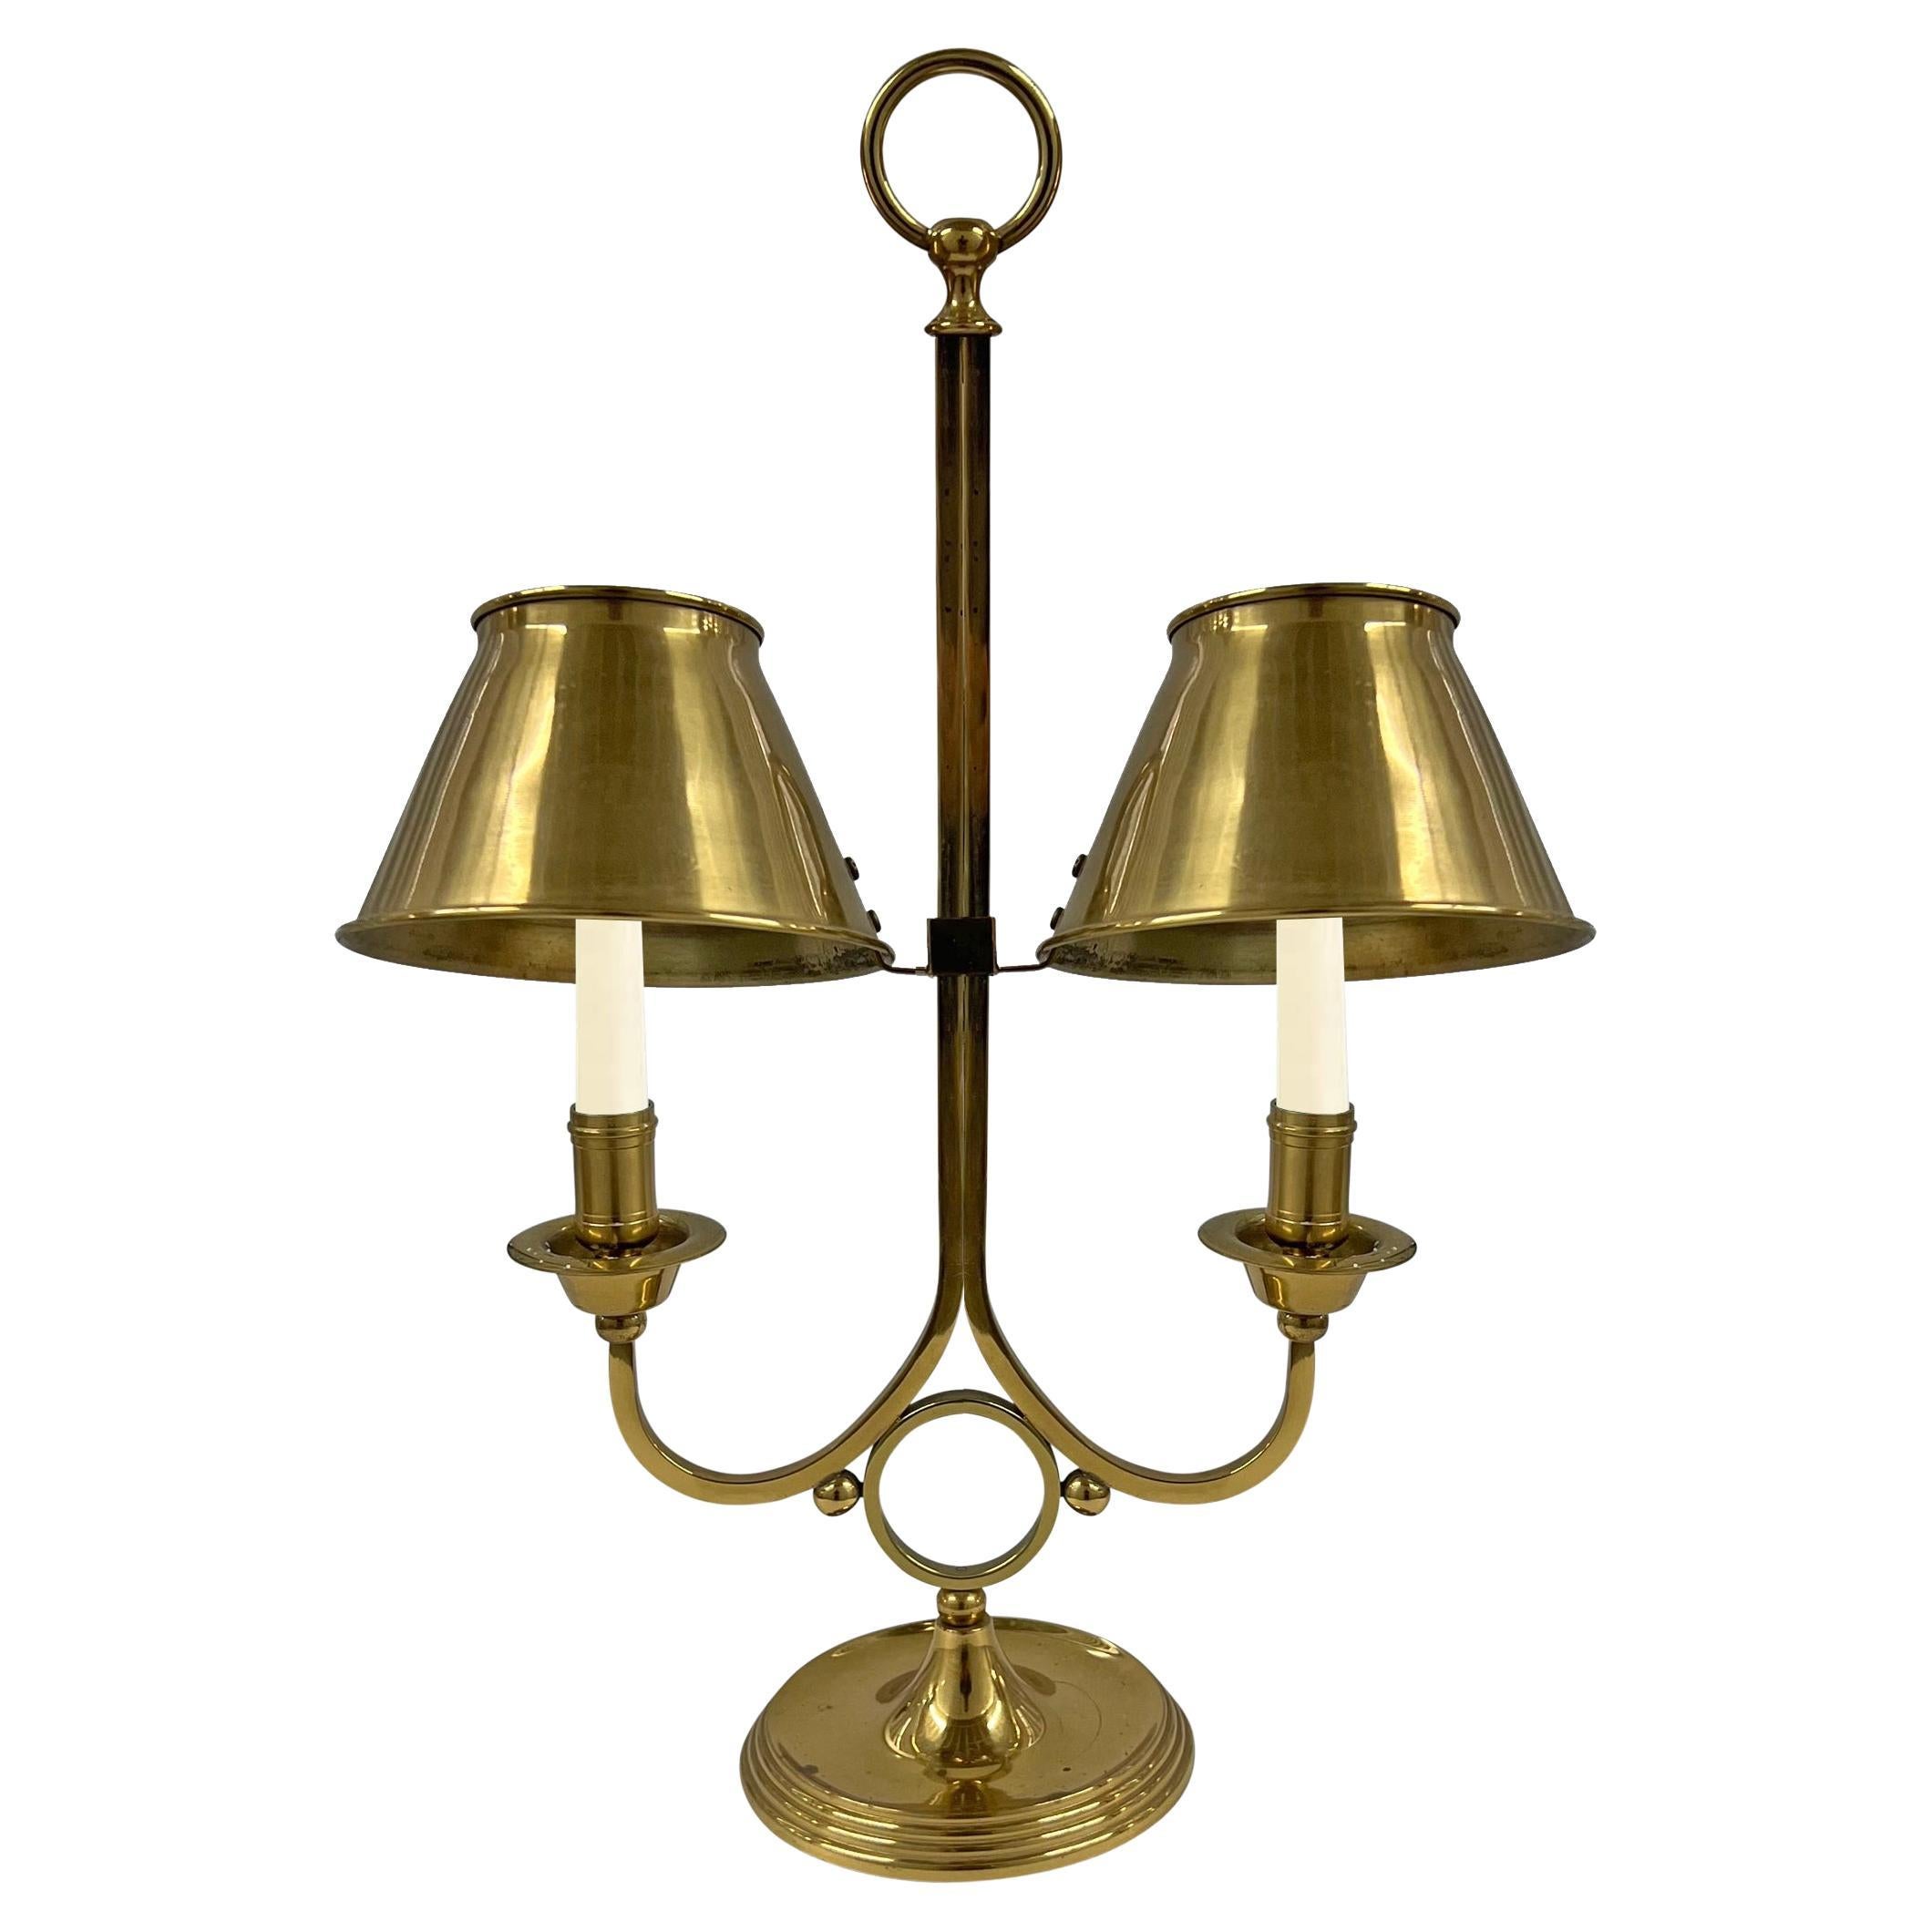 Vintage Adjustable Brass Candle Lamp